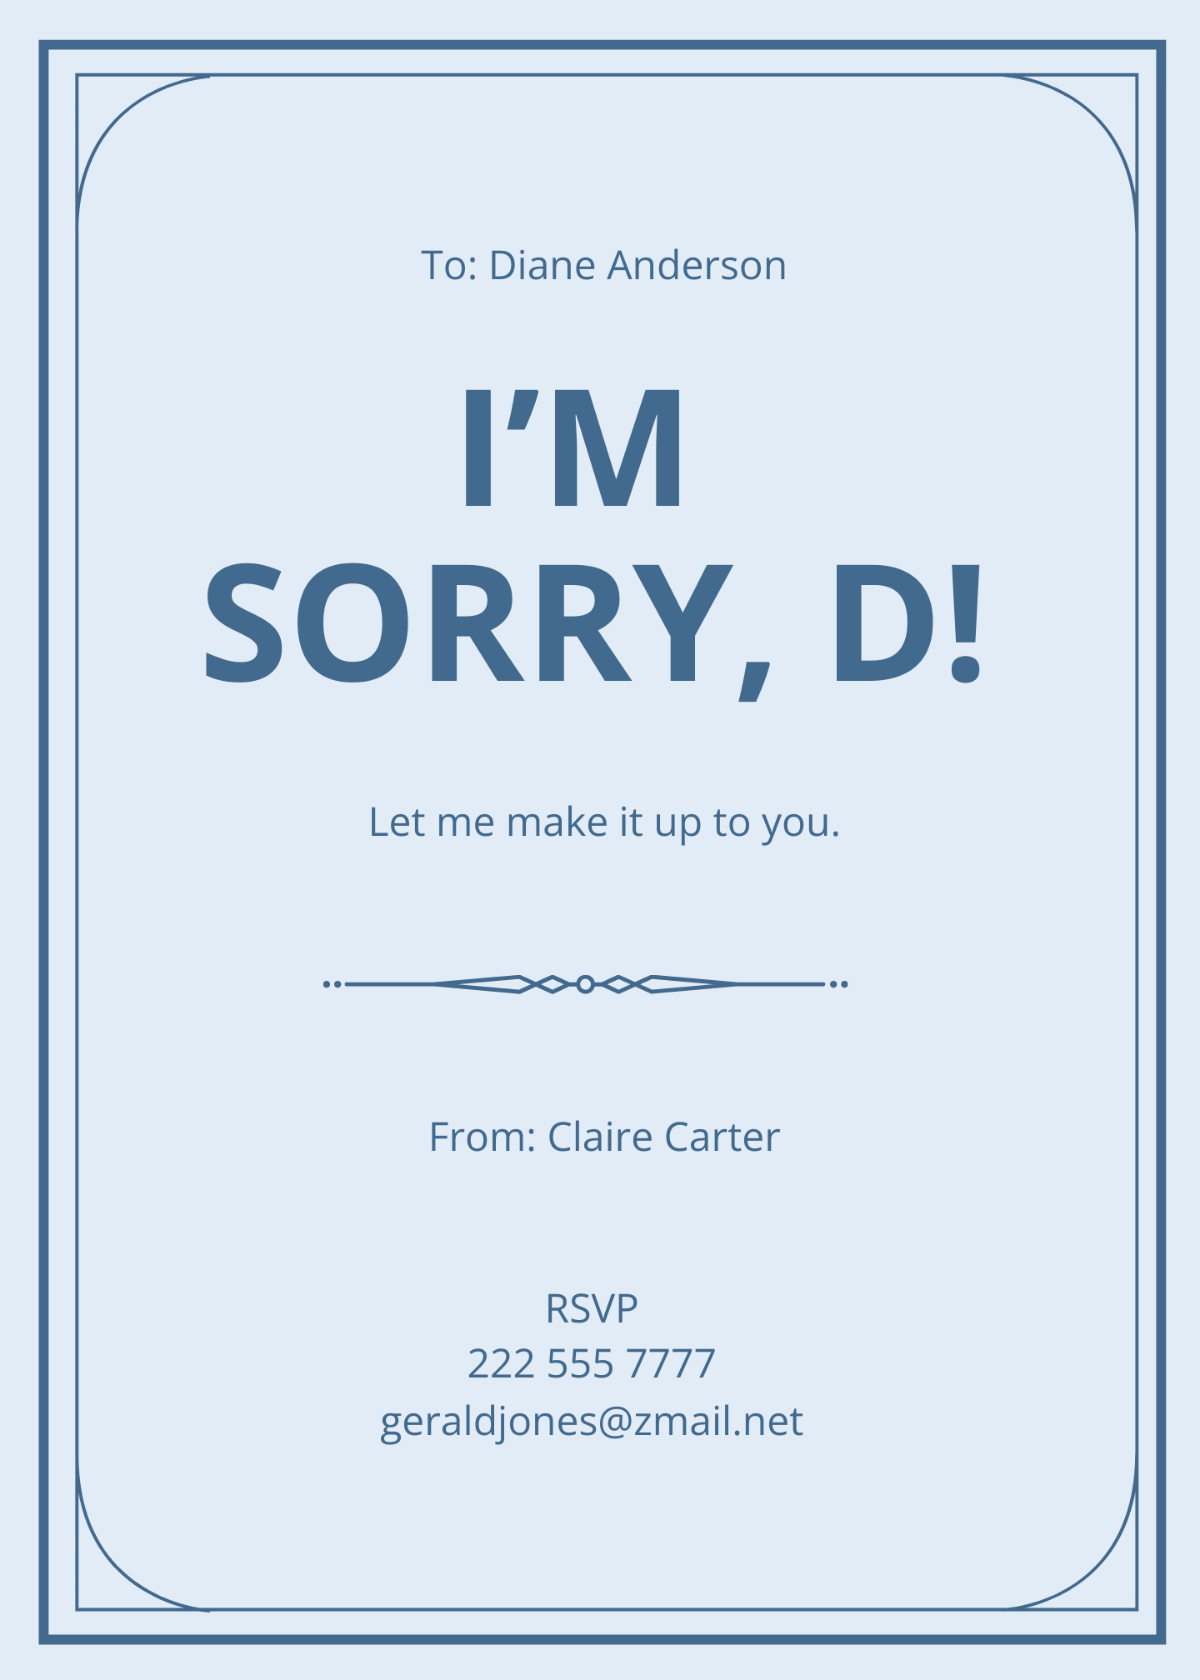 Virtual Apology Card Template